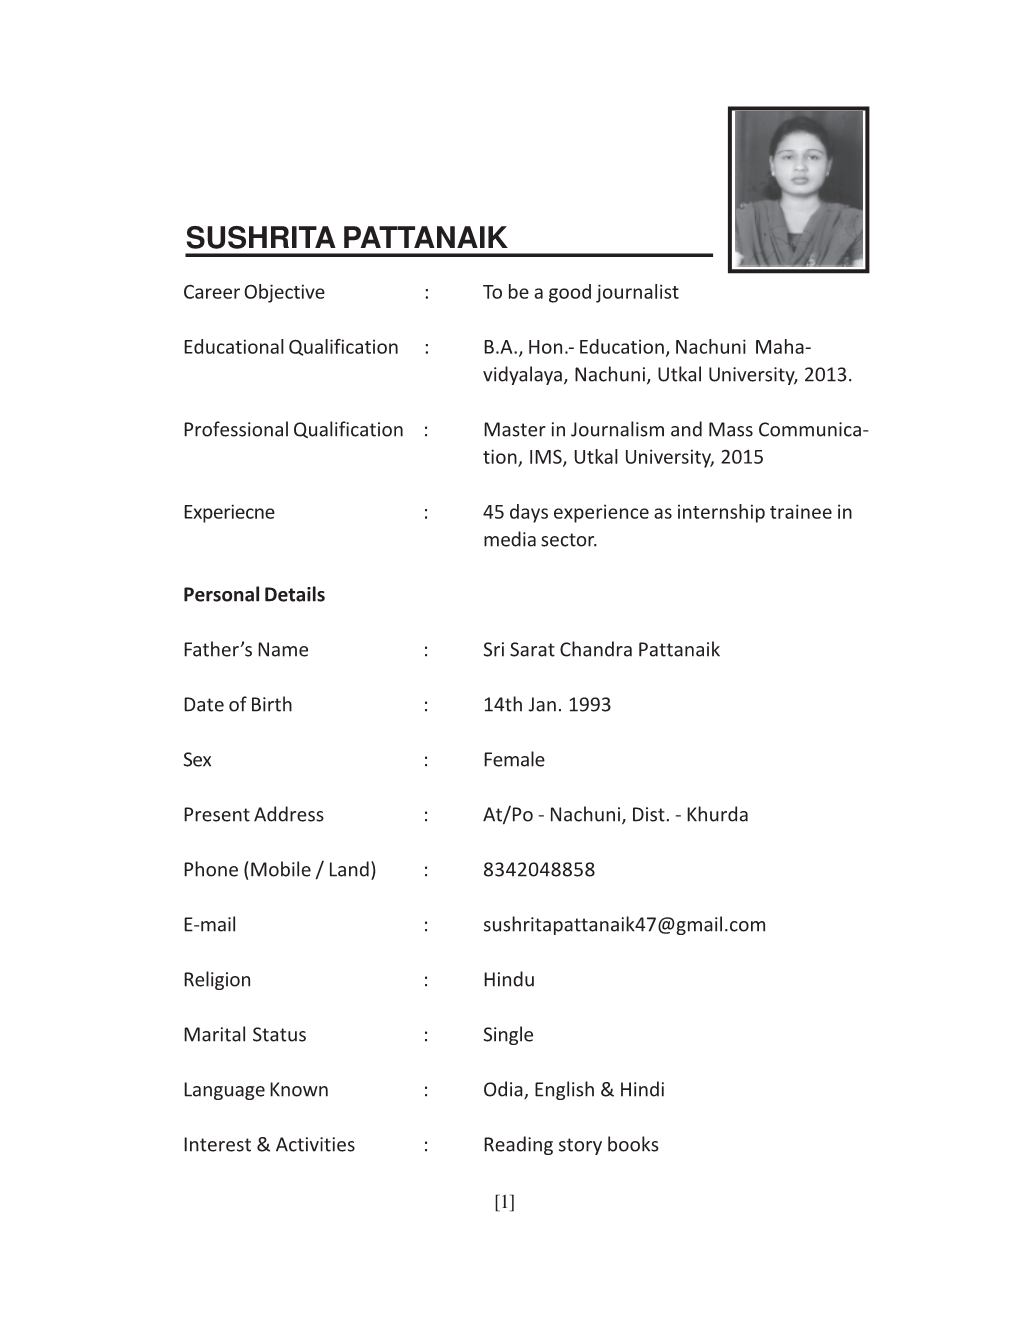 Sushrita Pattanaik